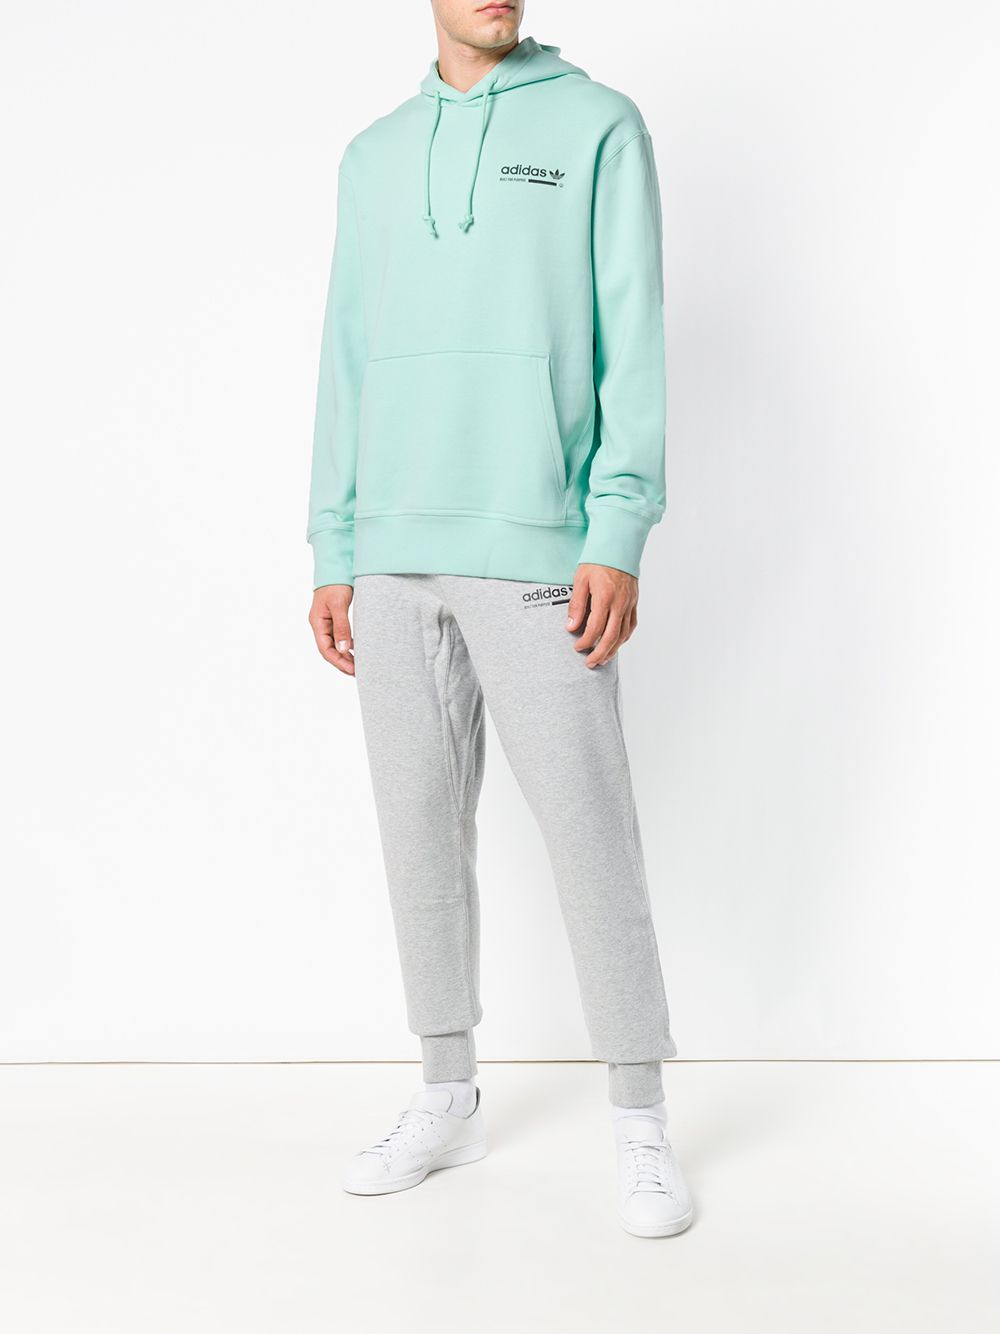 adidas kaval hoodie turquoise